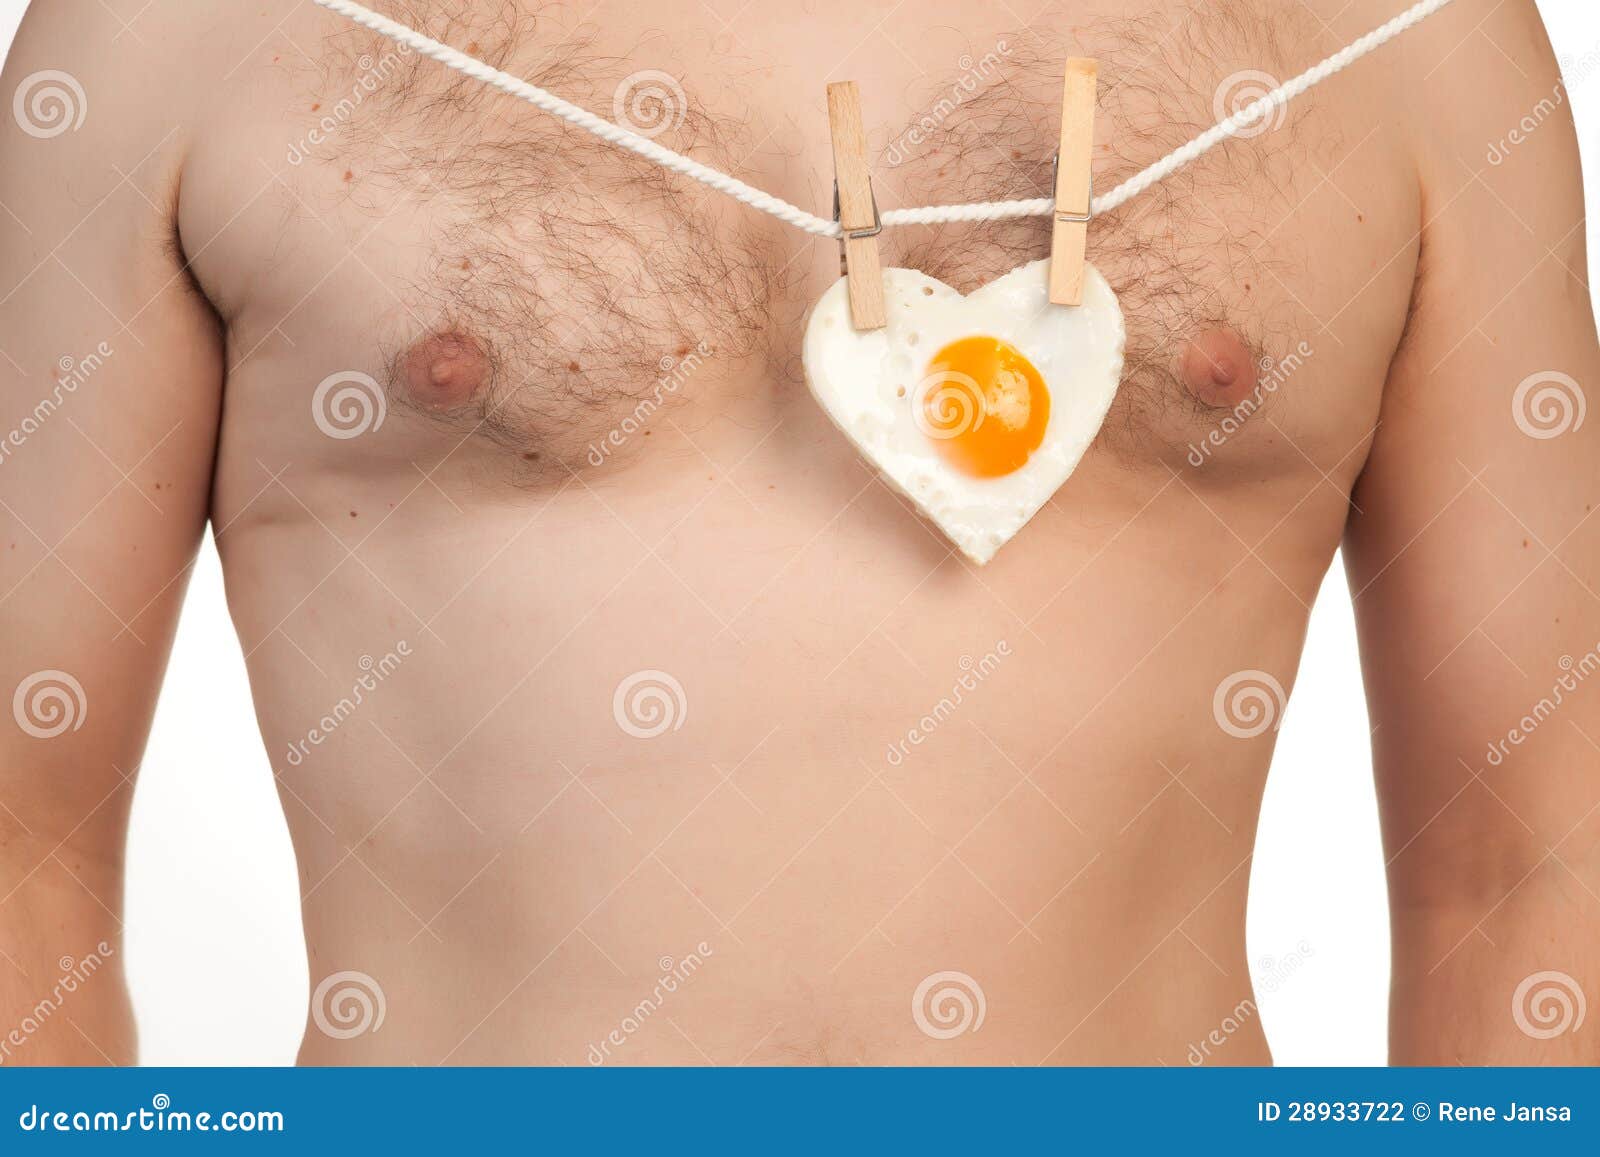 Heart Shaped Fried Egg on Man S Chest Stock Photo - Image of shape